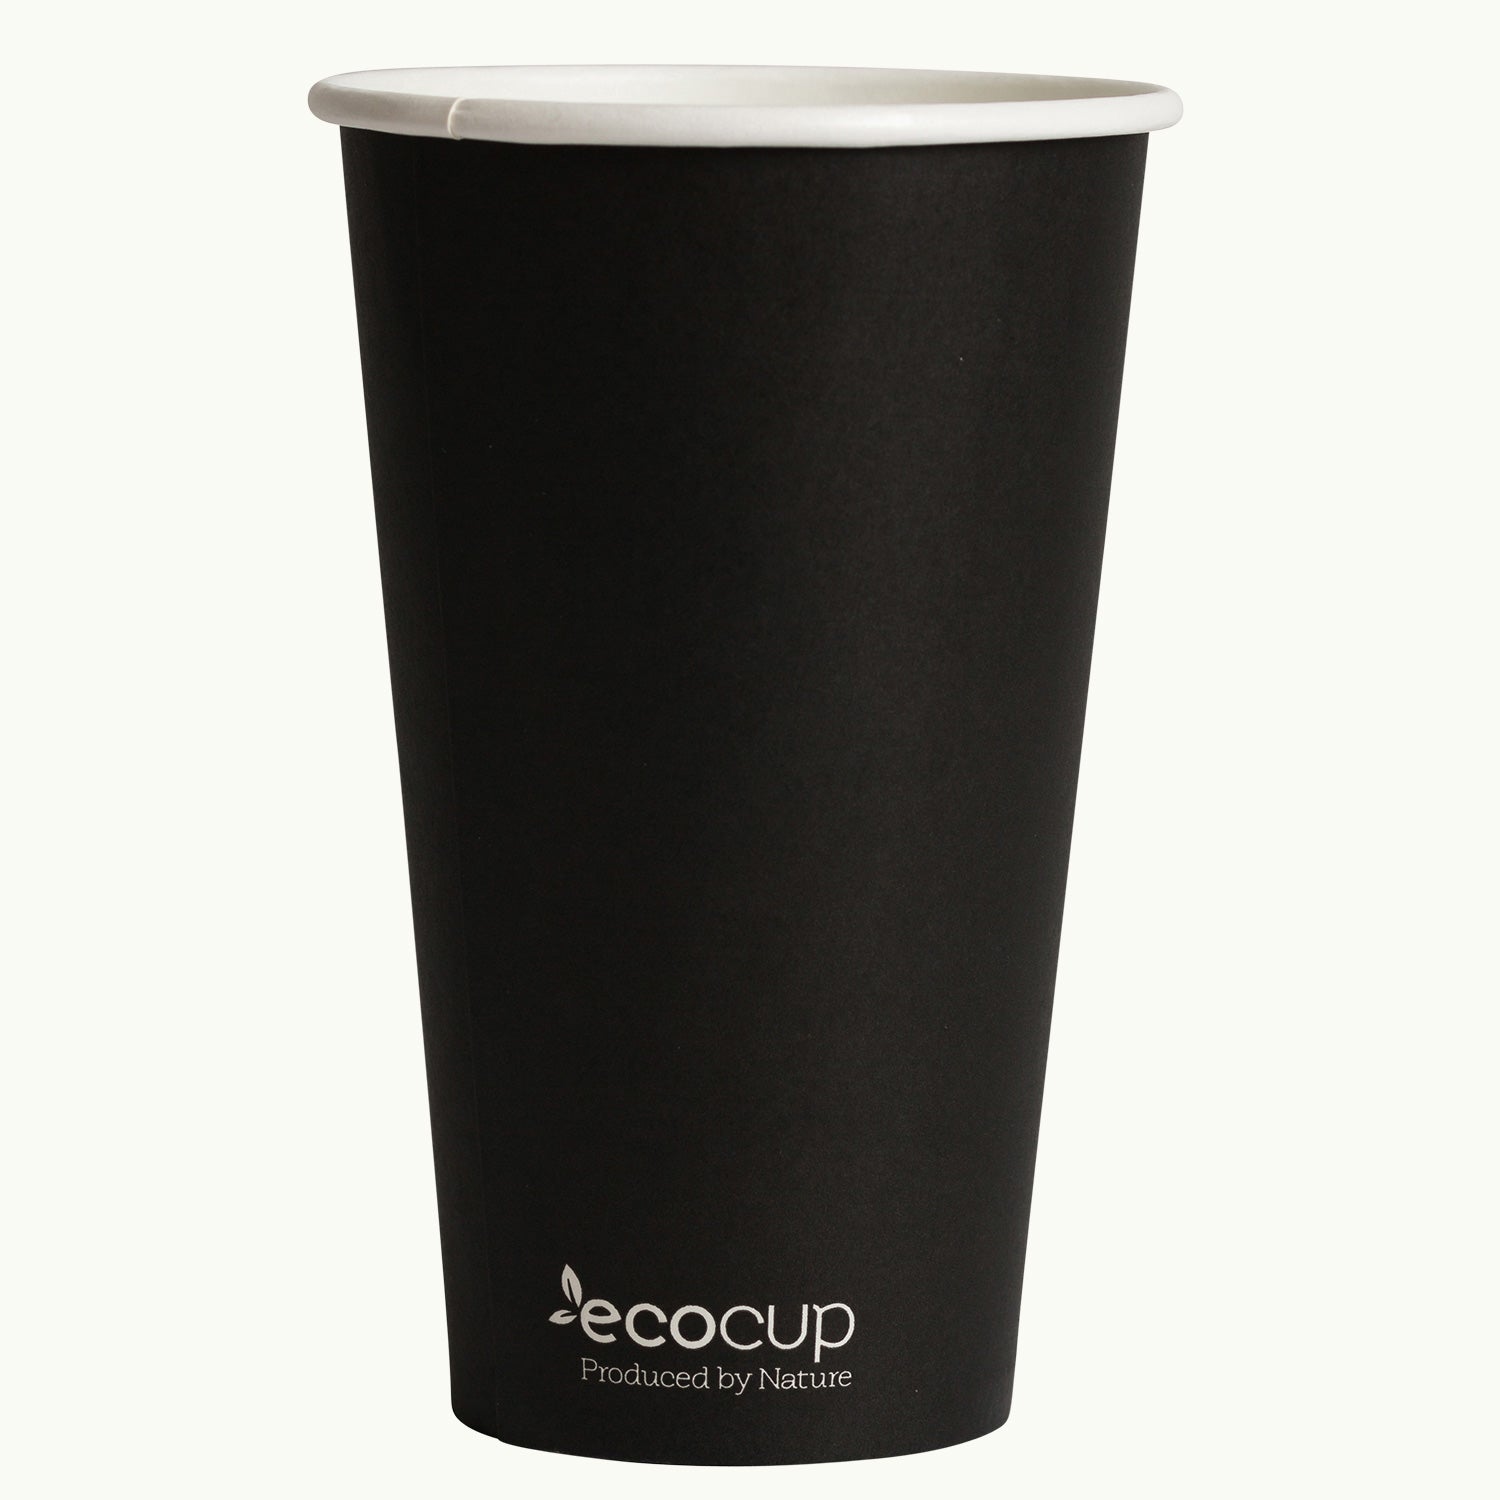 500ml black takeaway coffee cup